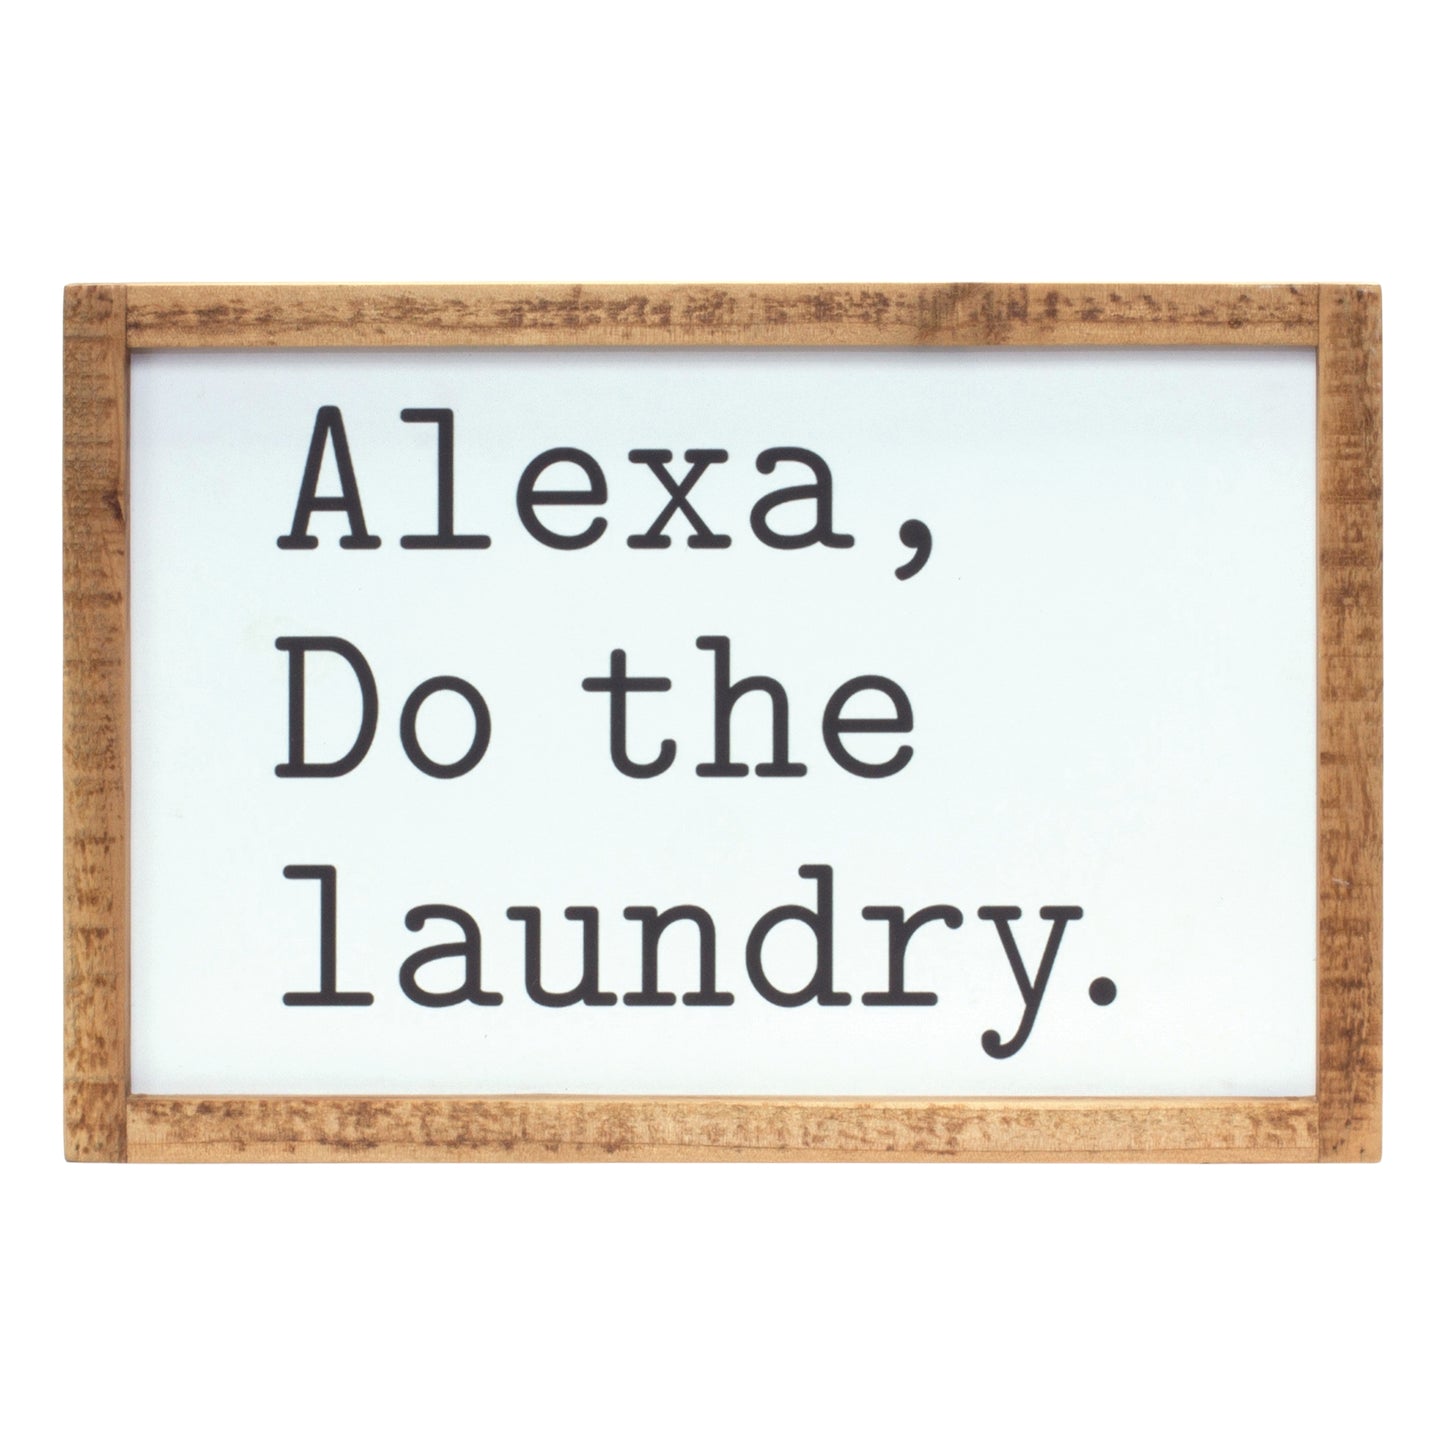 Alexa, Laundry Sign 12"L x 8"H MDF/Wood